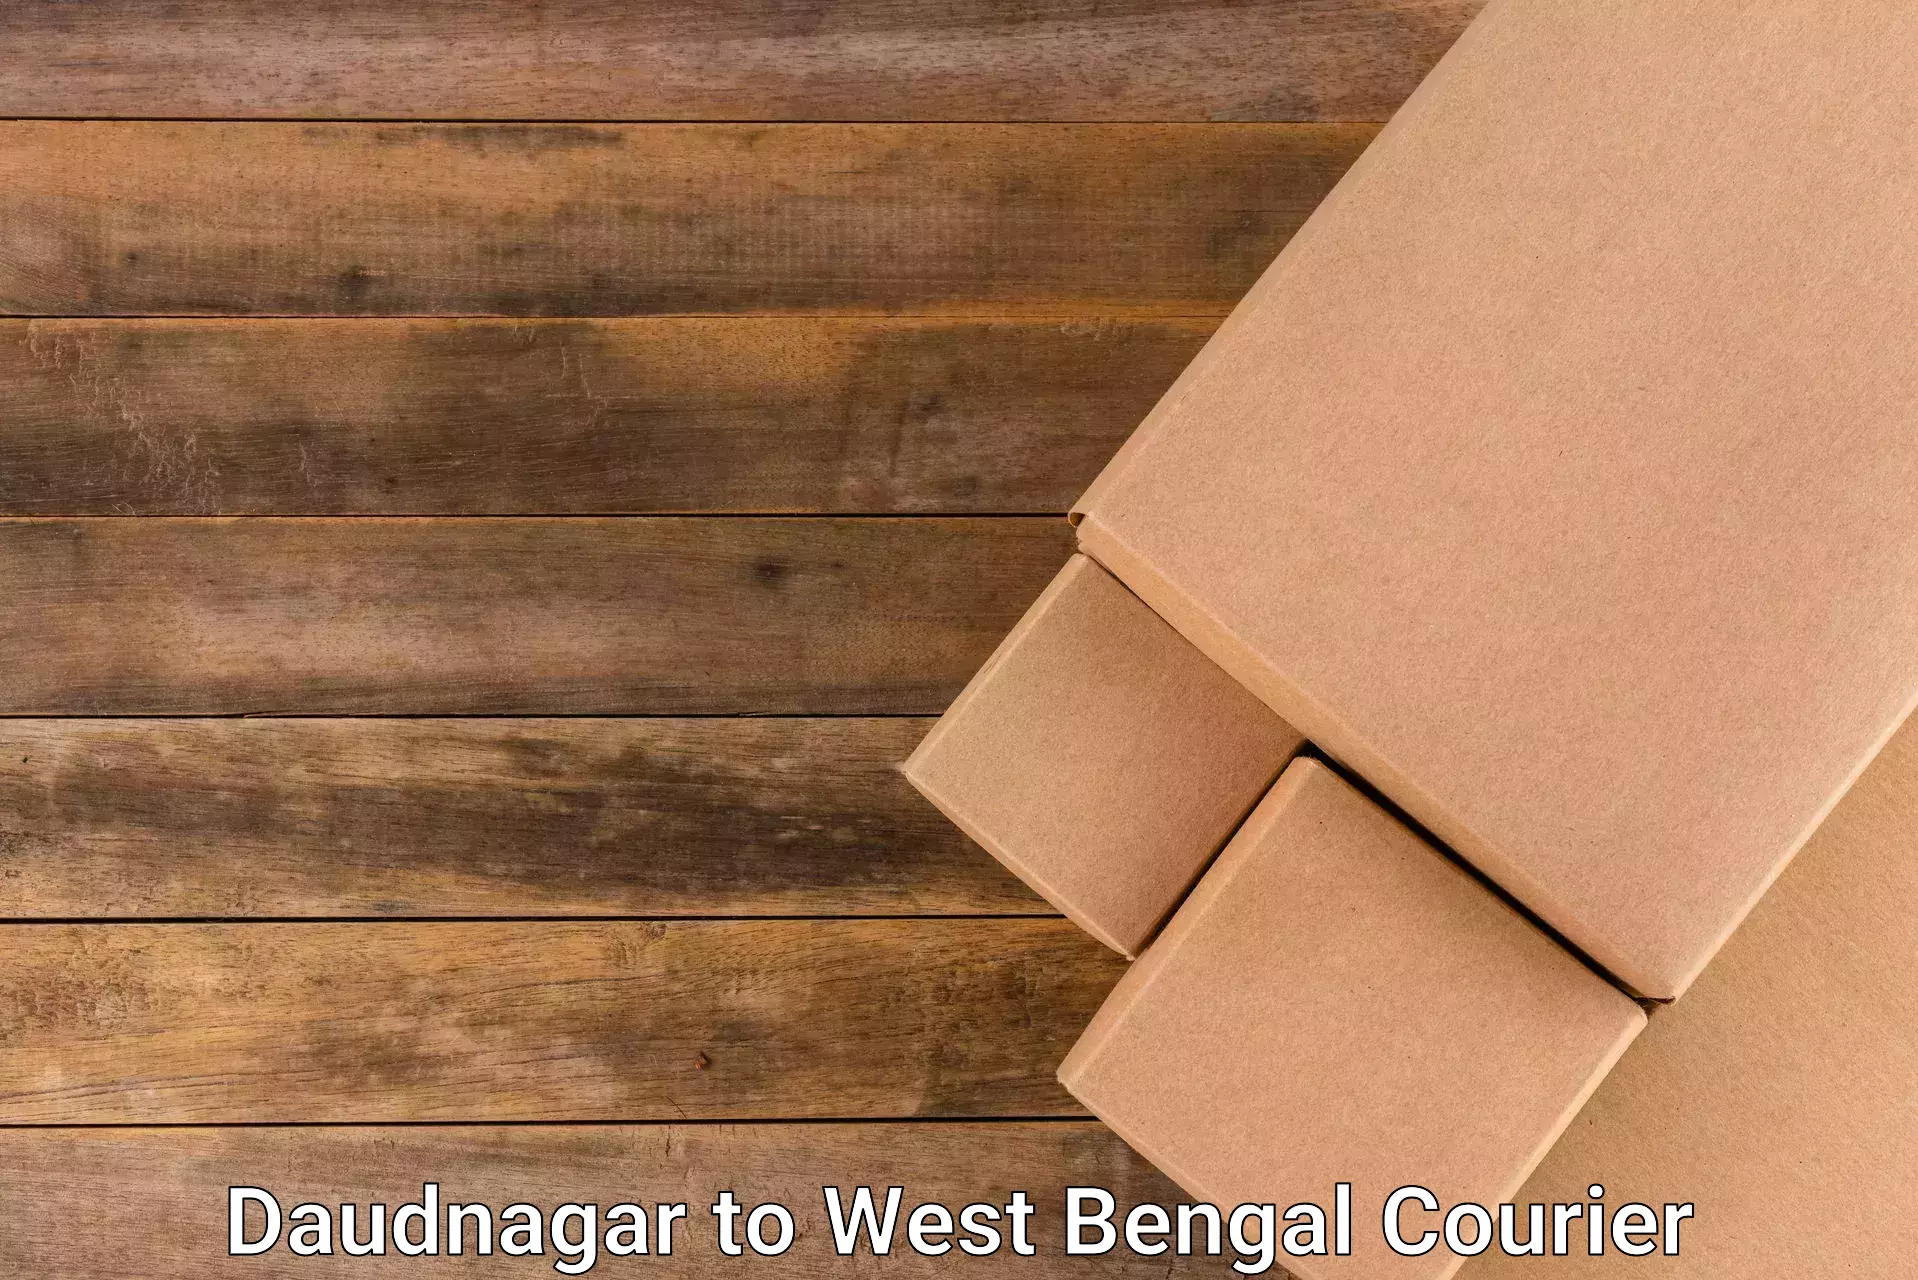 Courier tracking online in Daudnagar to Lodhan